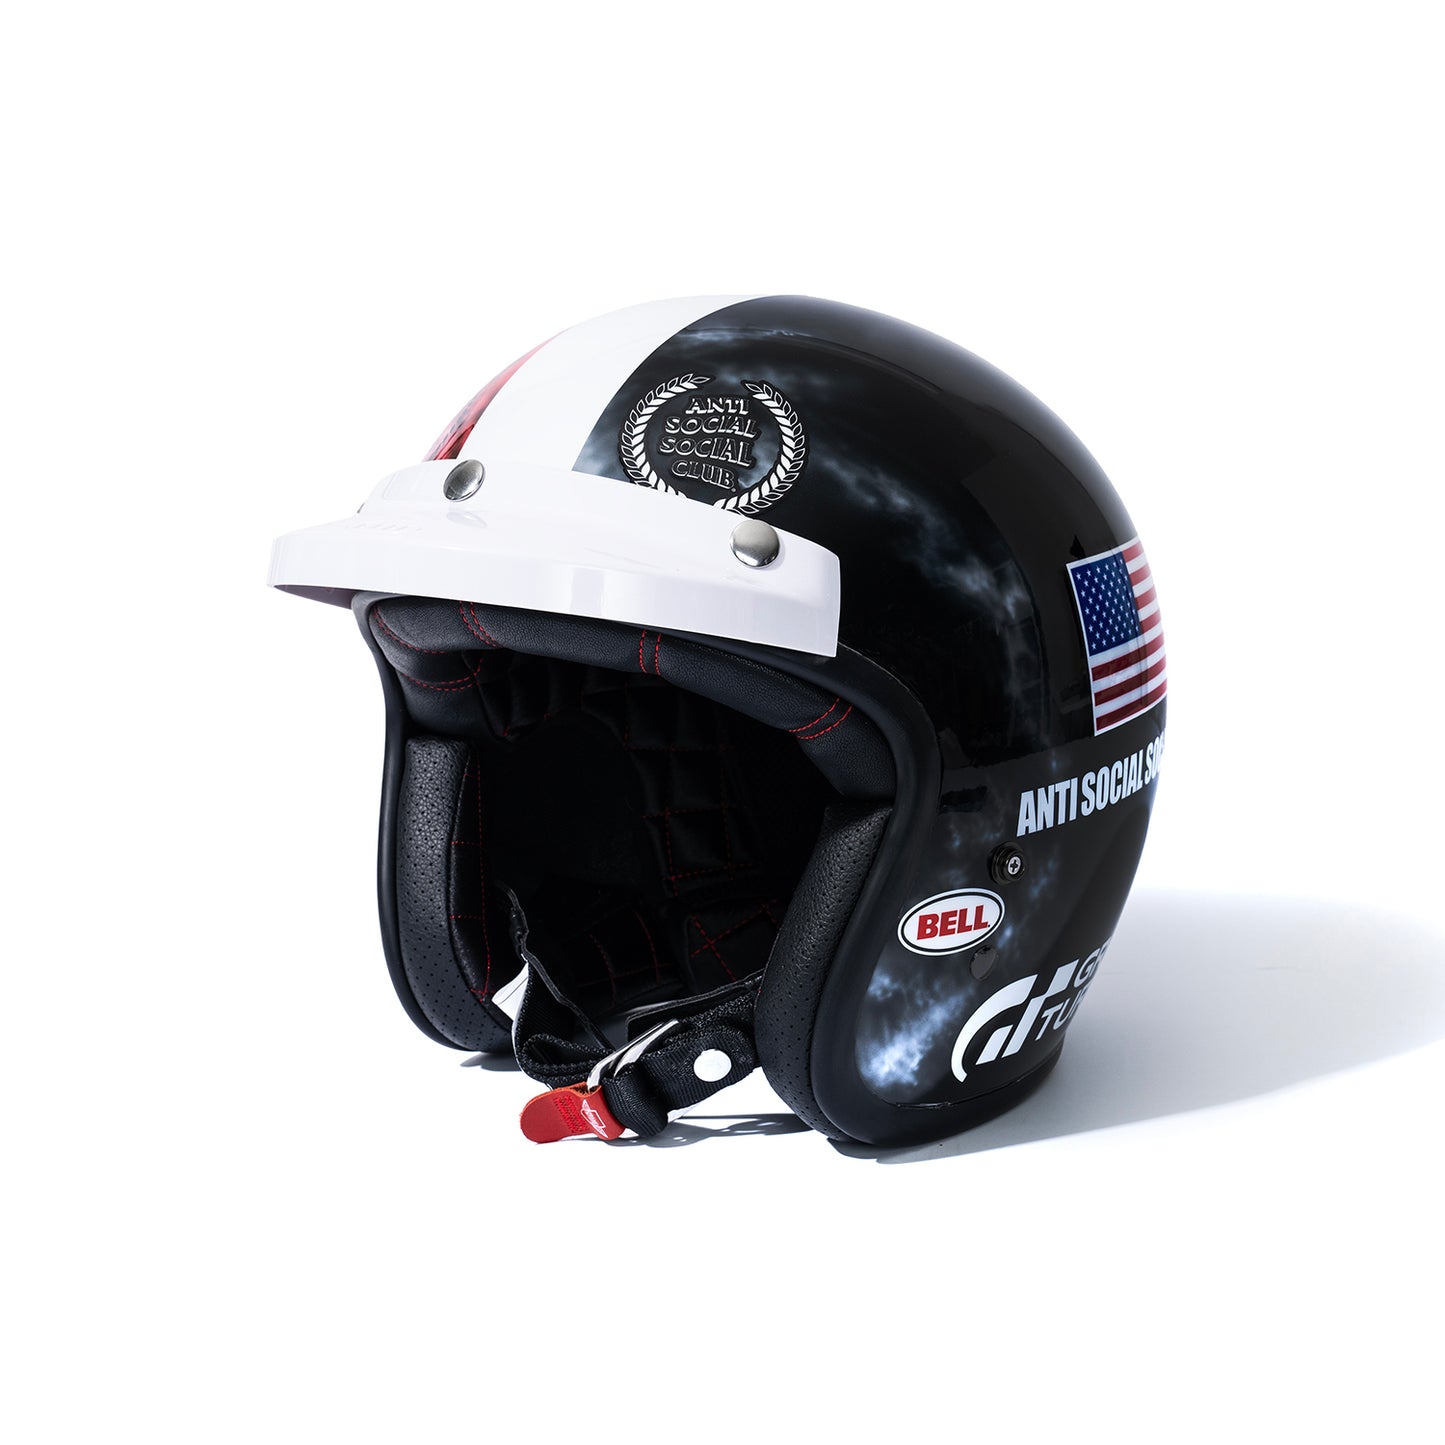 ASSC x Gran Turismo Bell Custom 500 Helmet